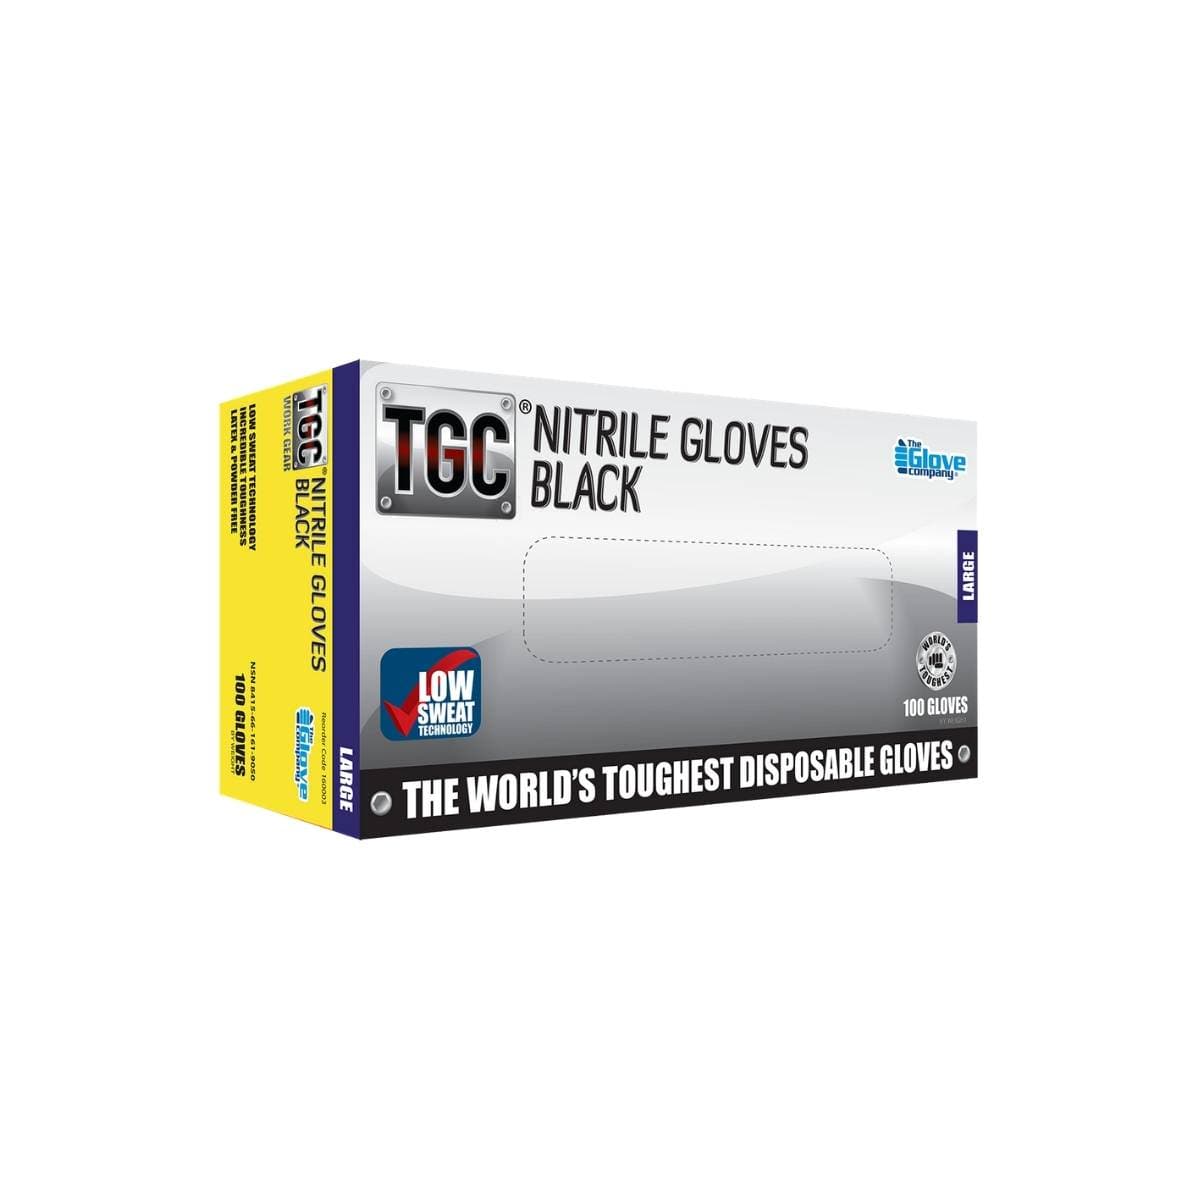 TGC Black Nitrile Disposable Gloves 160000 (BOX OF 100)